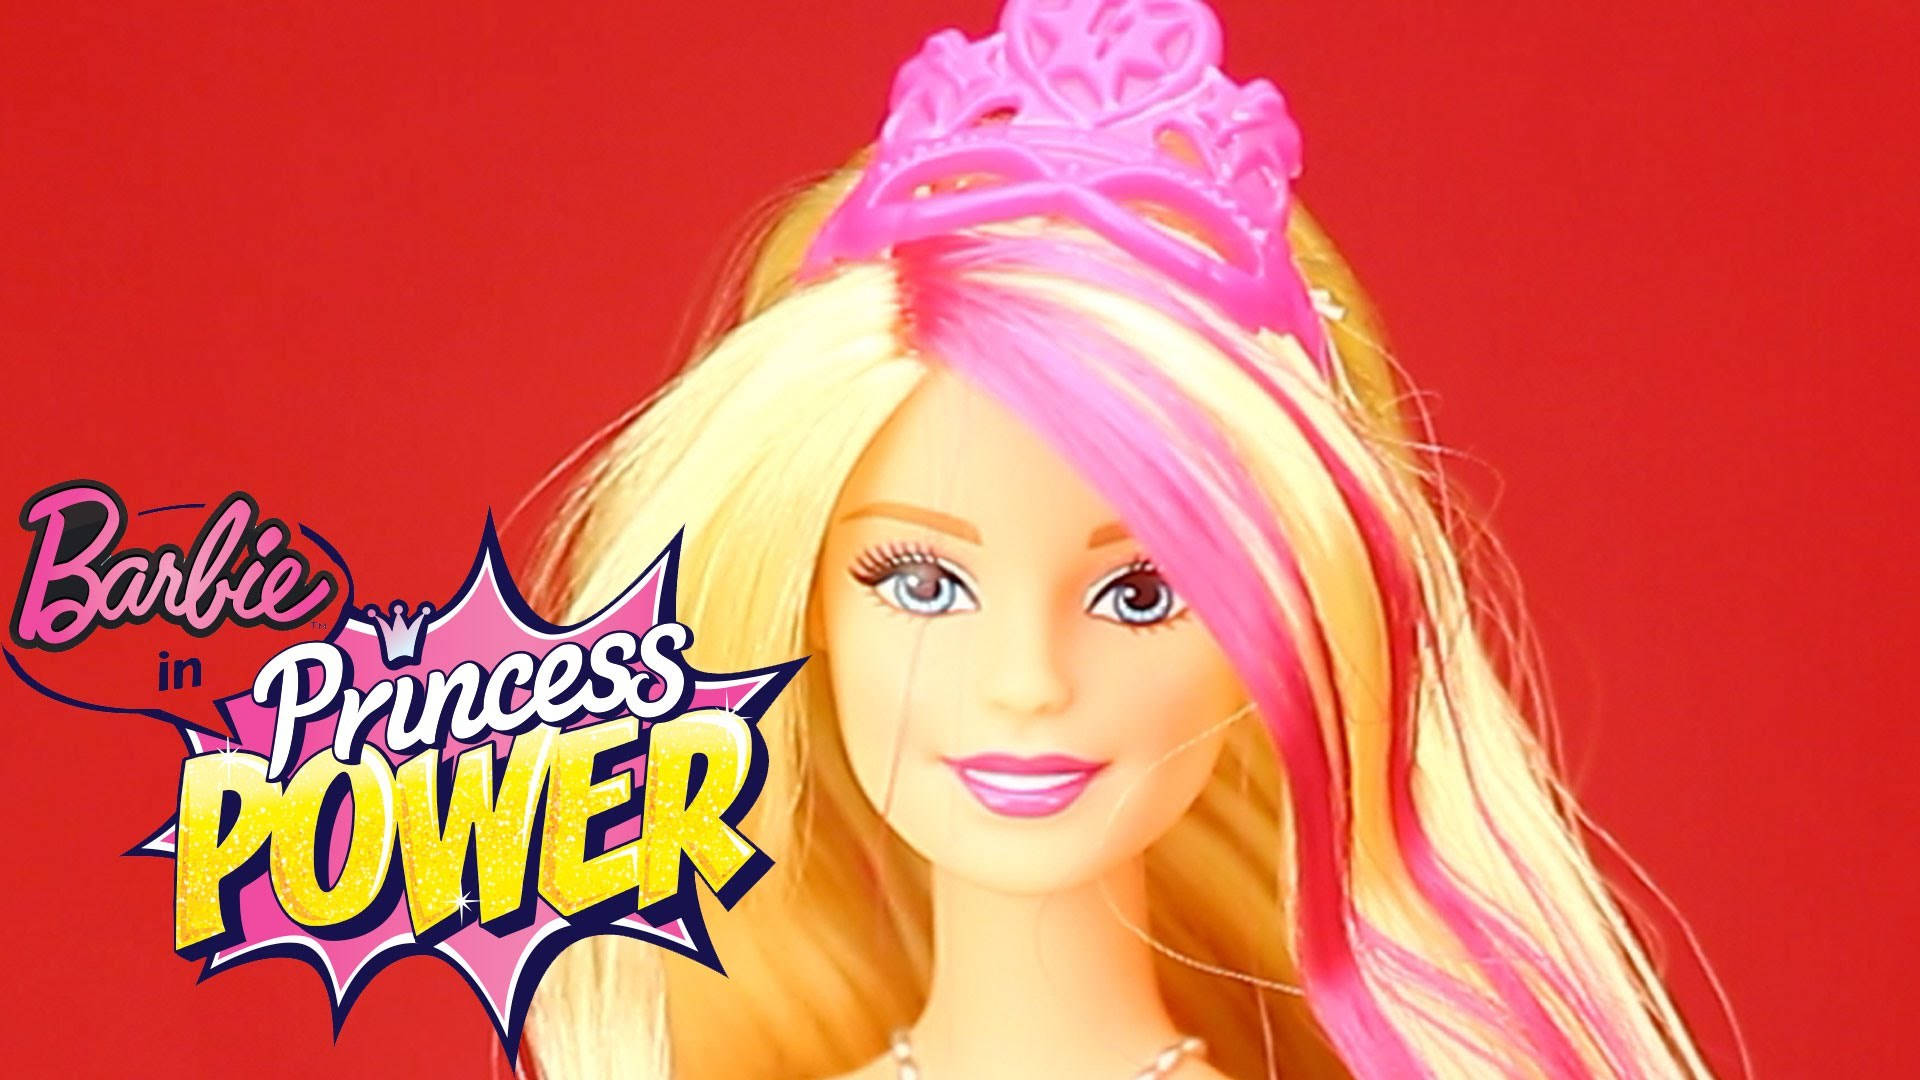 Download Barbie Princess And Popstar Performing Wallpaper